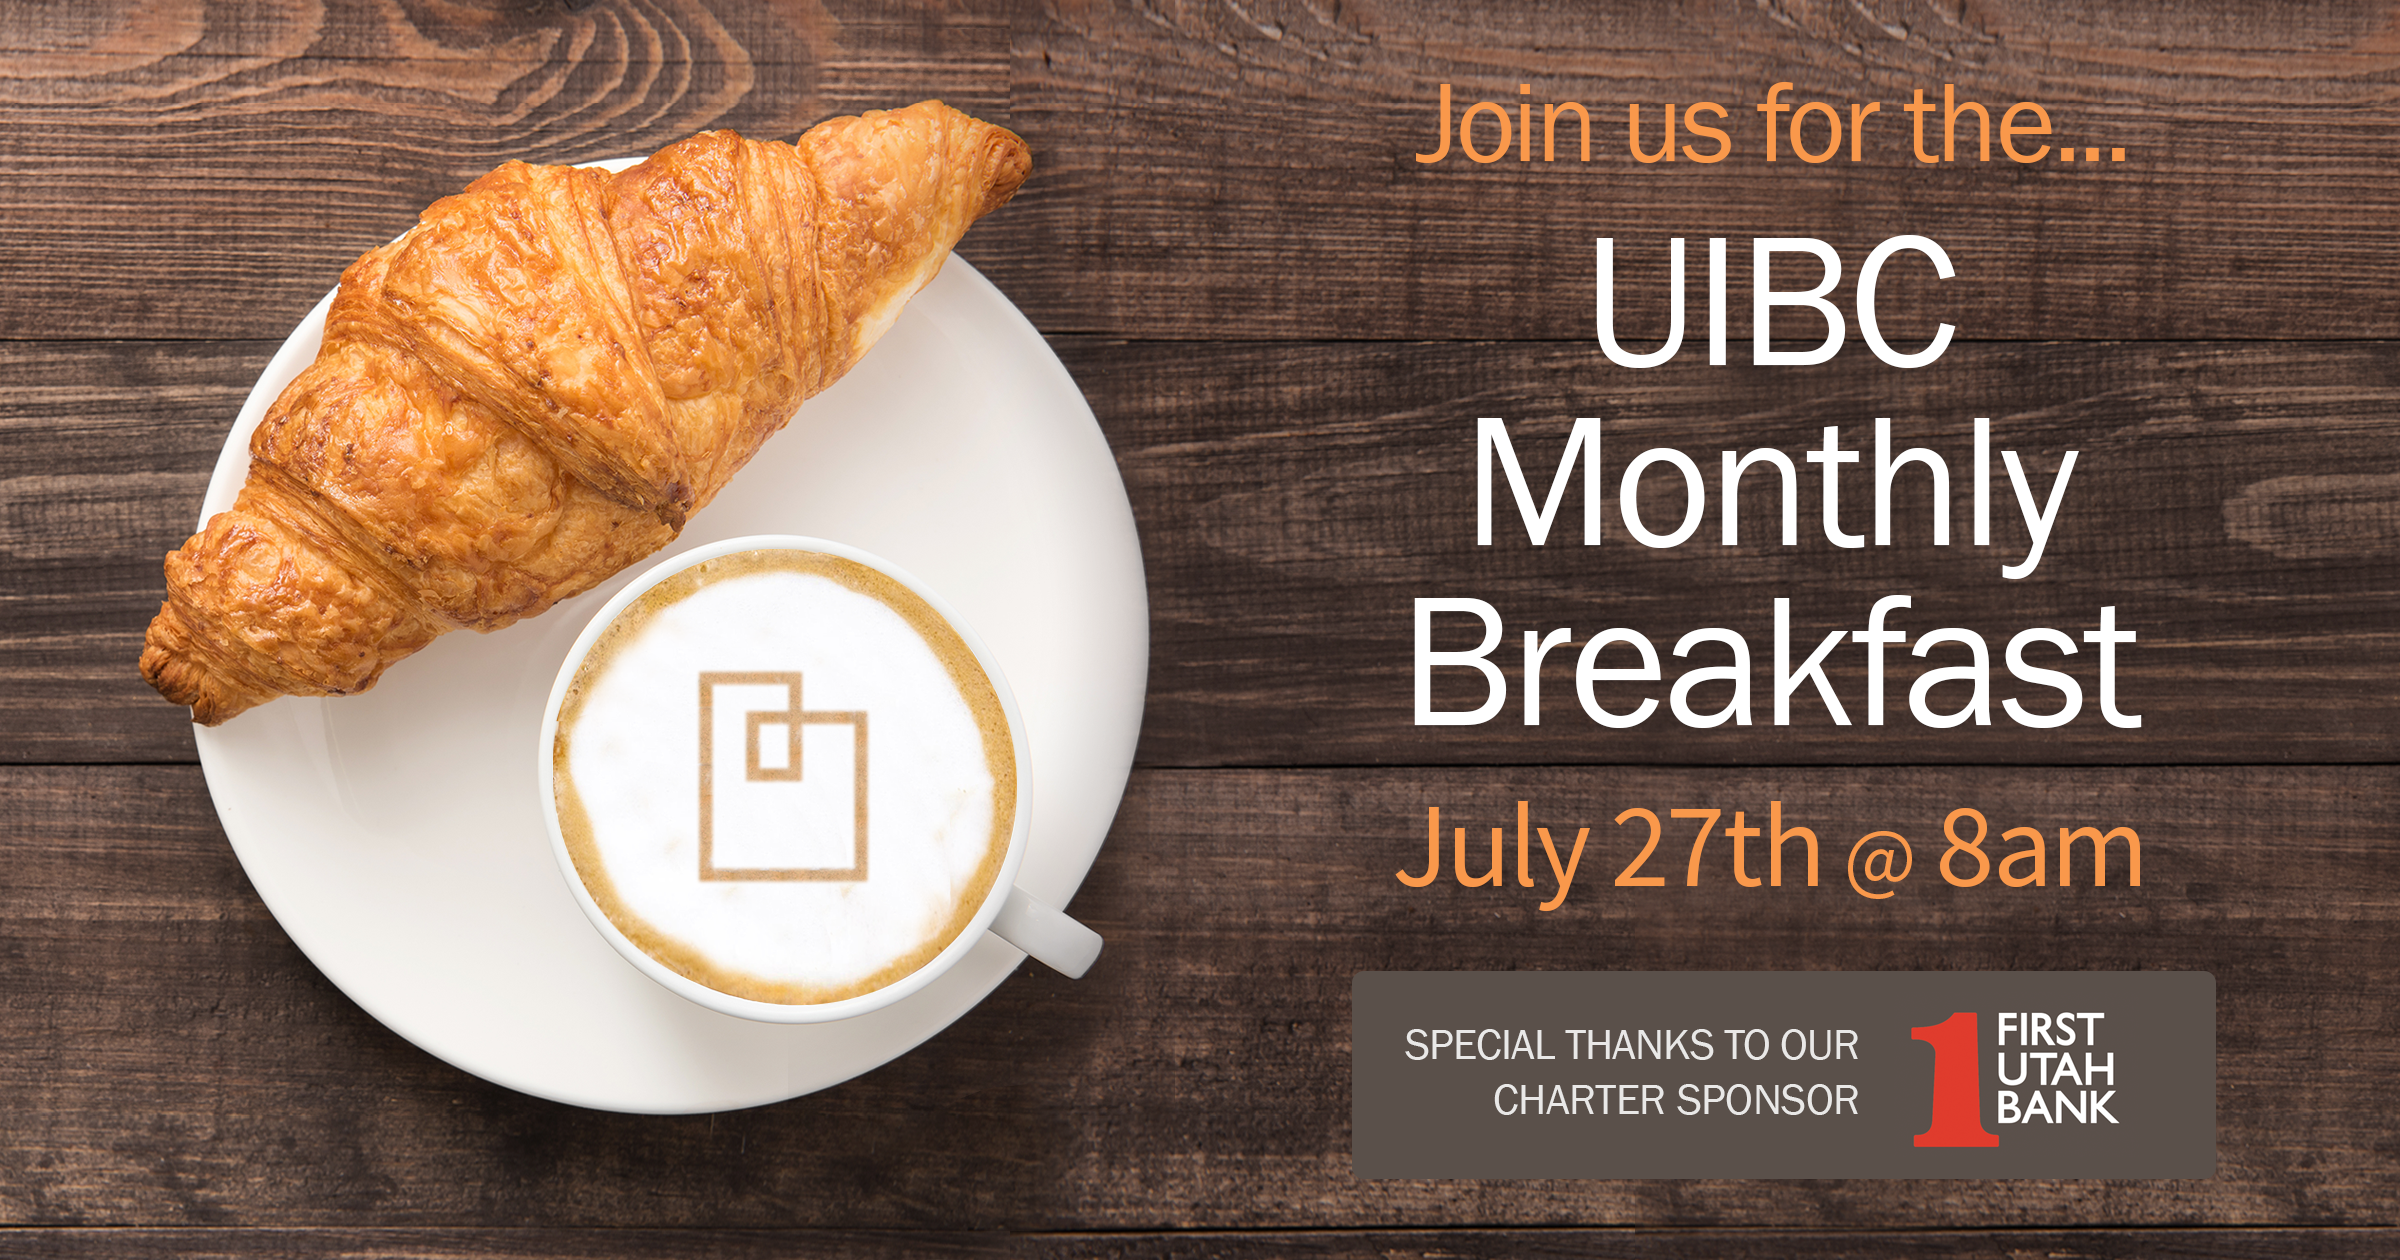 UIBC Monthly Breakfast - July